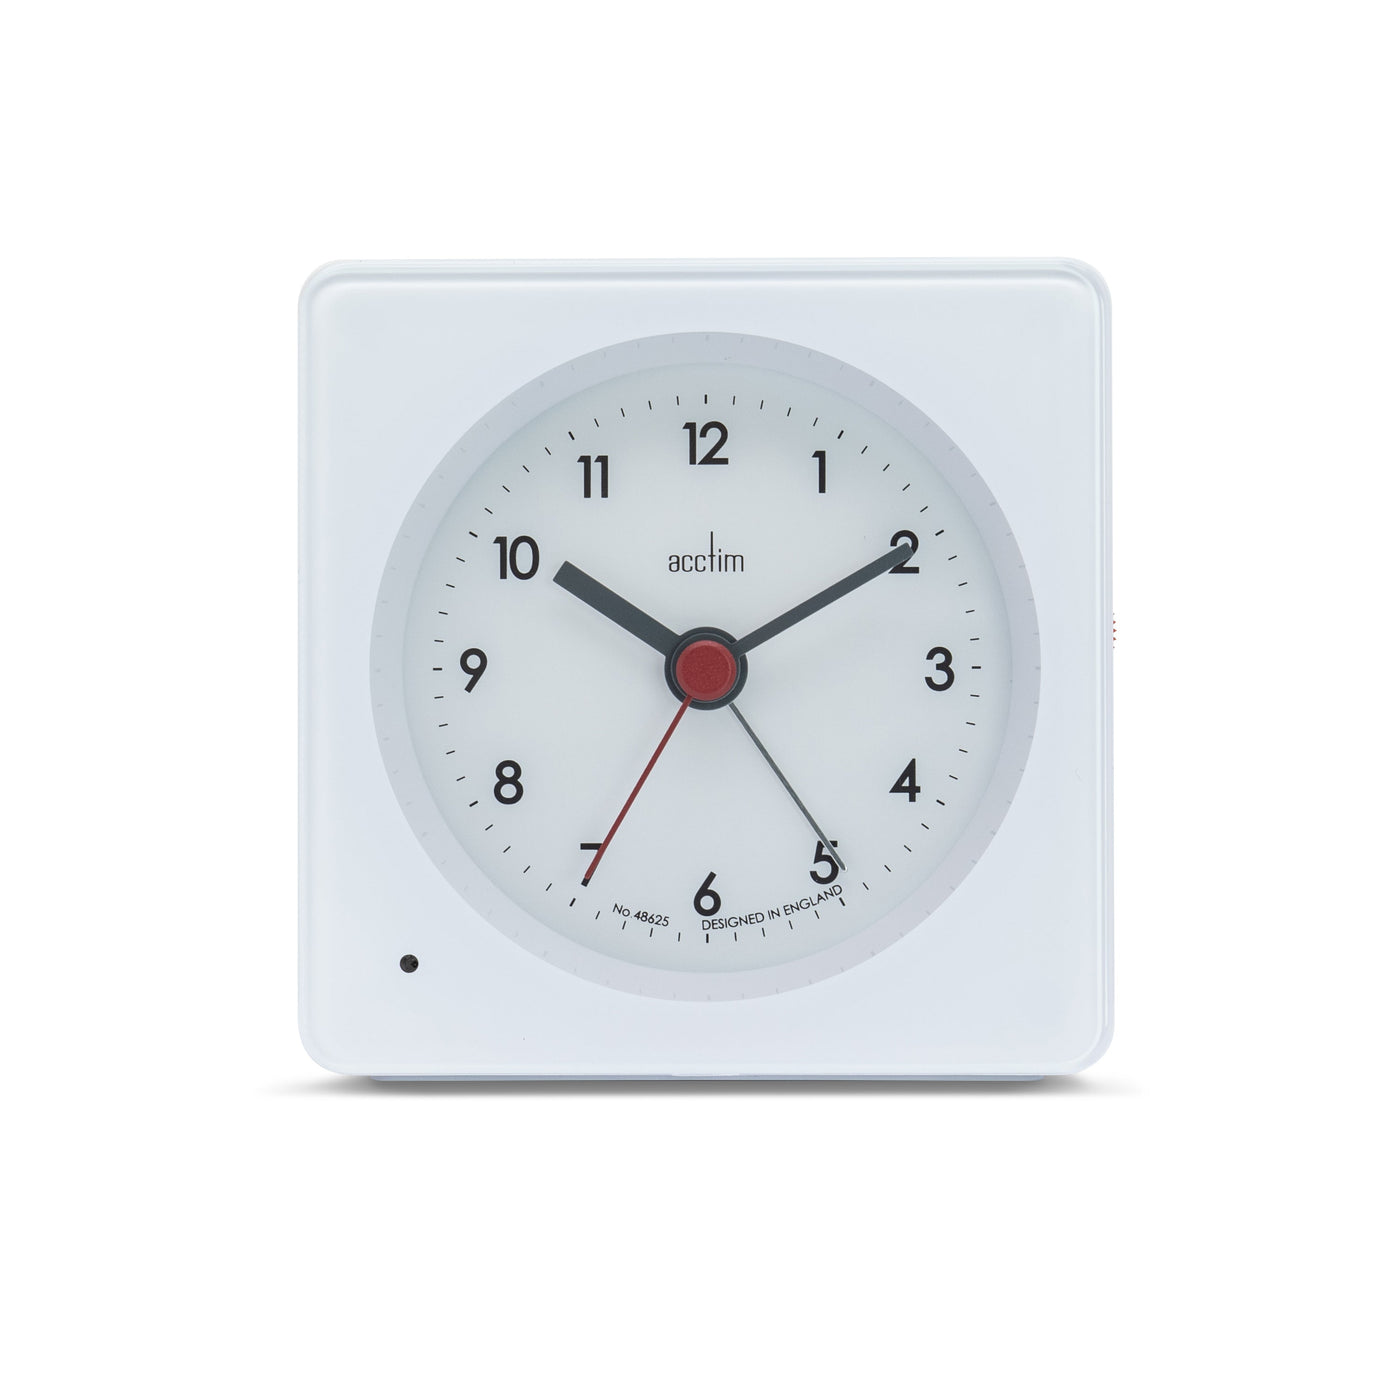 Acctim Barber Alarm Clock White - timeframedclocks